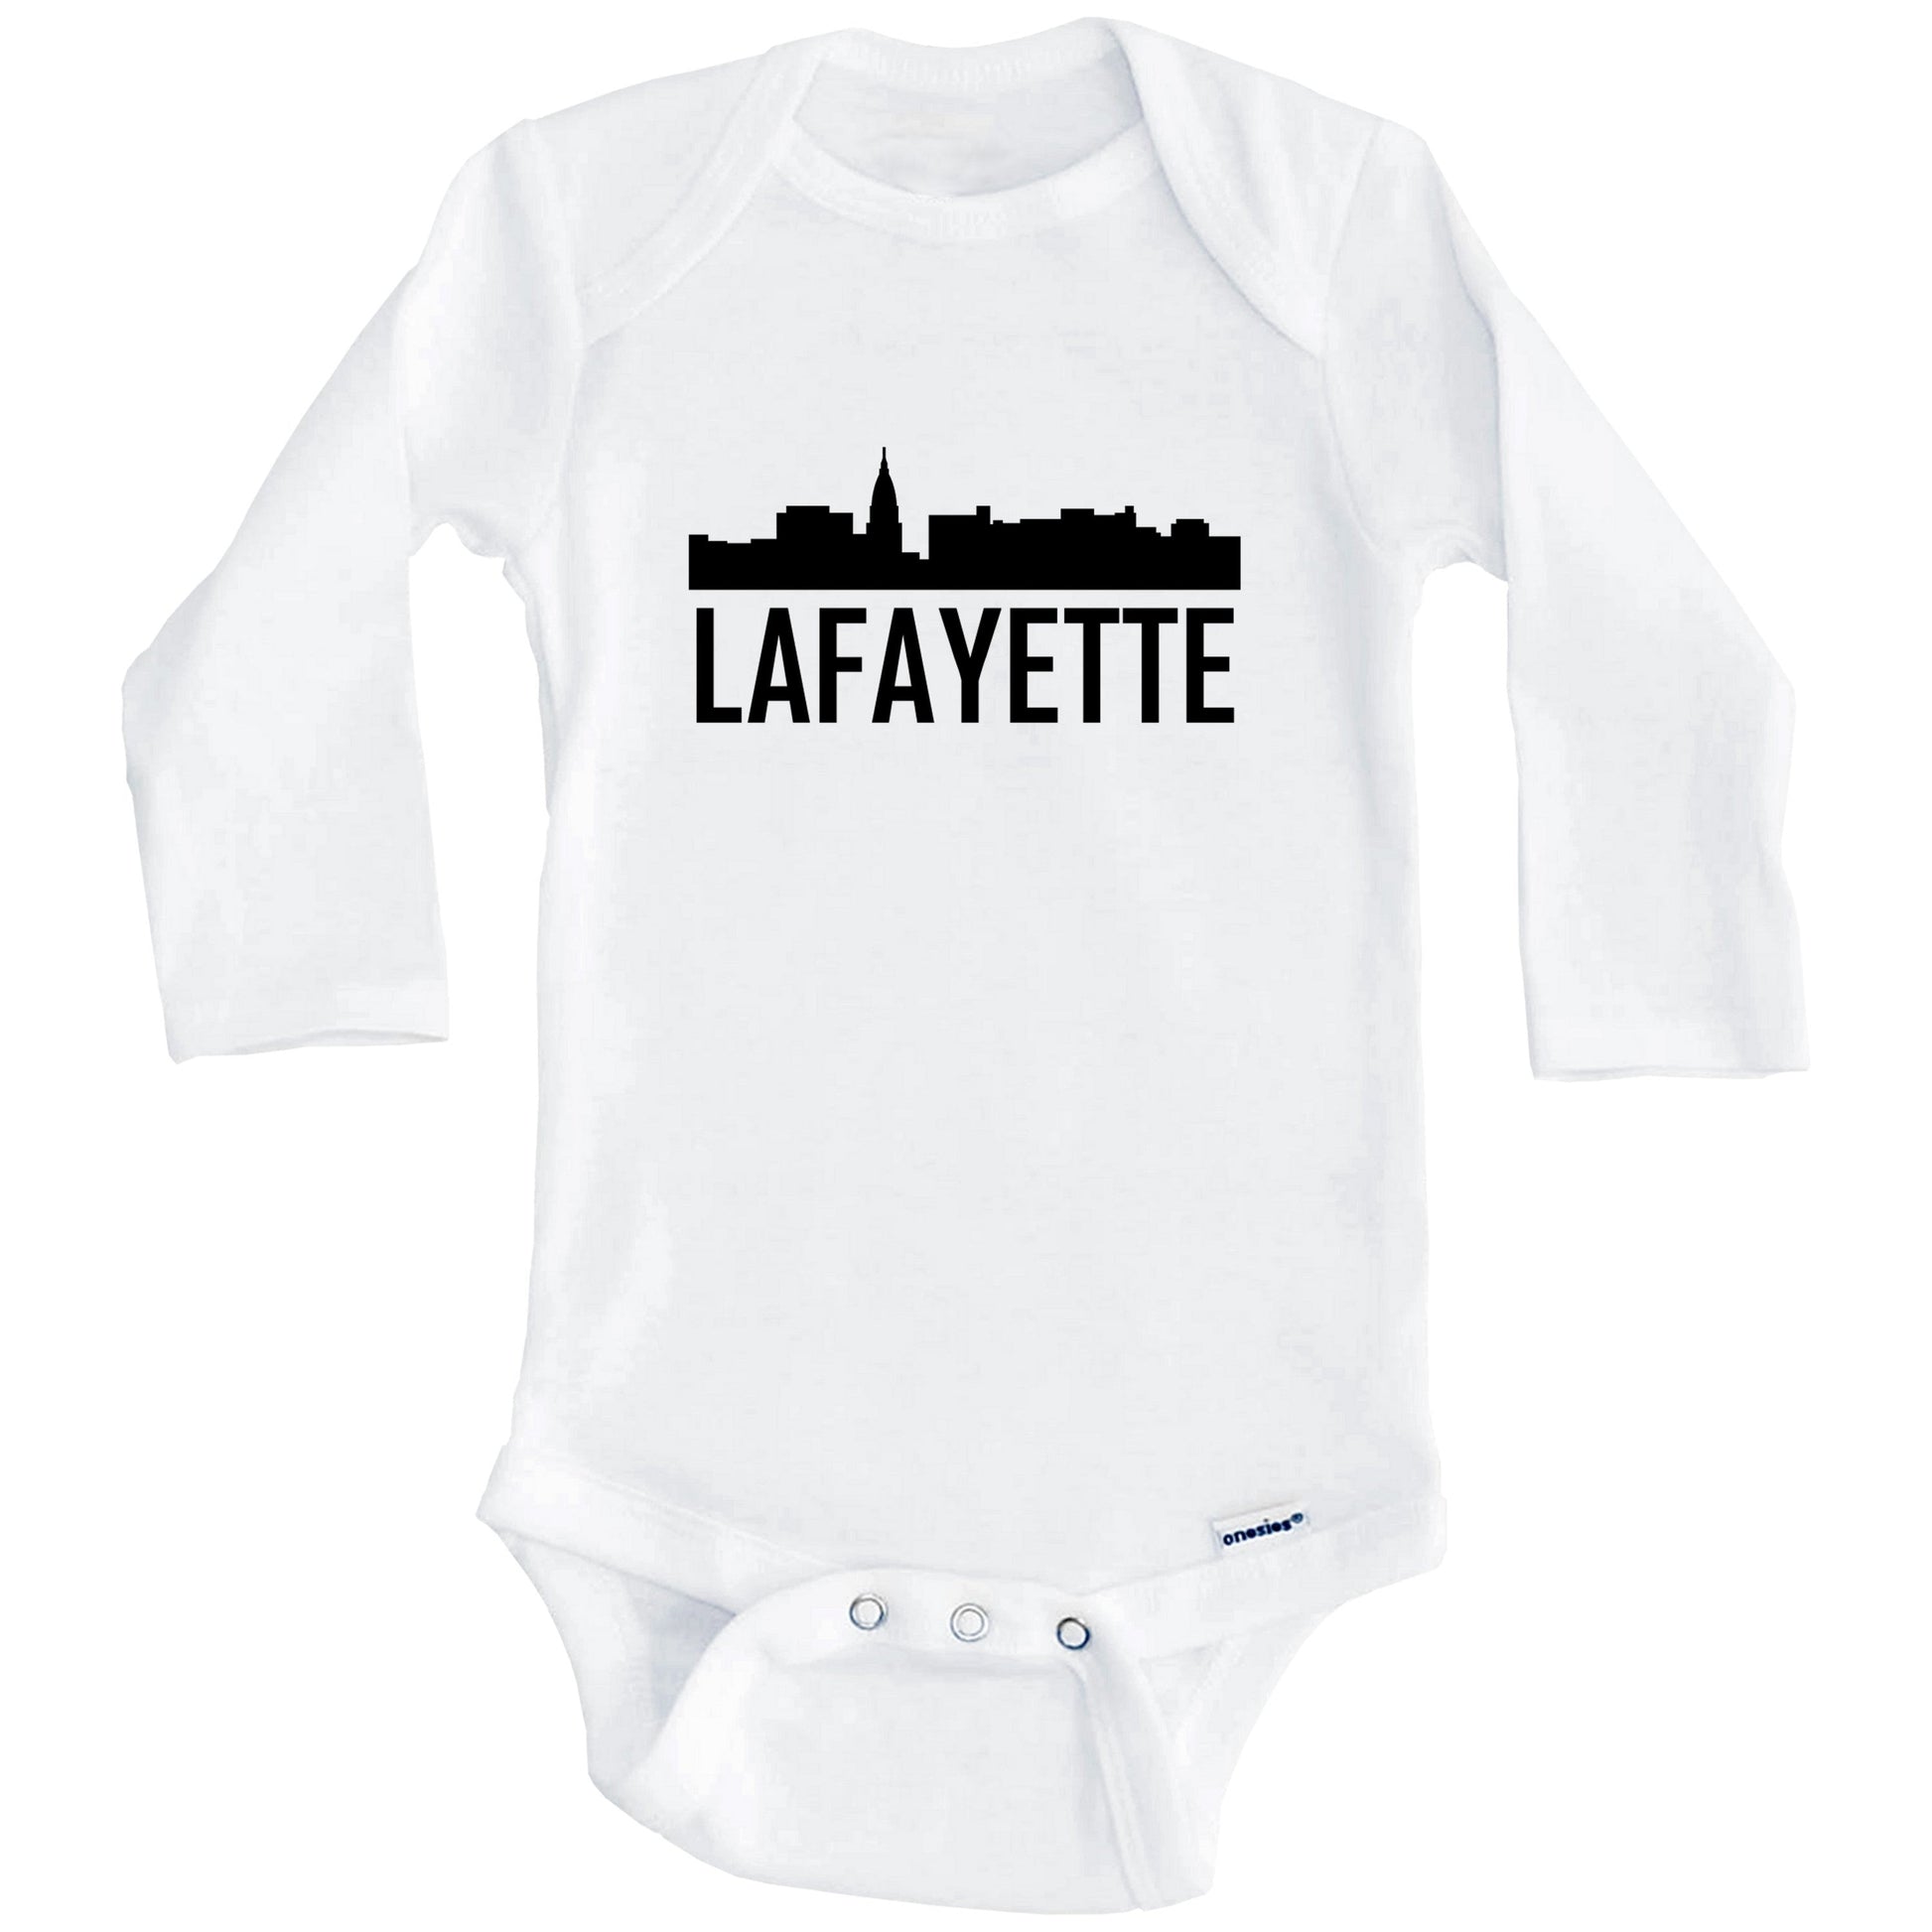 Lafayette Indiana Skyline Silhouette Baby Onesie (Long Sleeves)